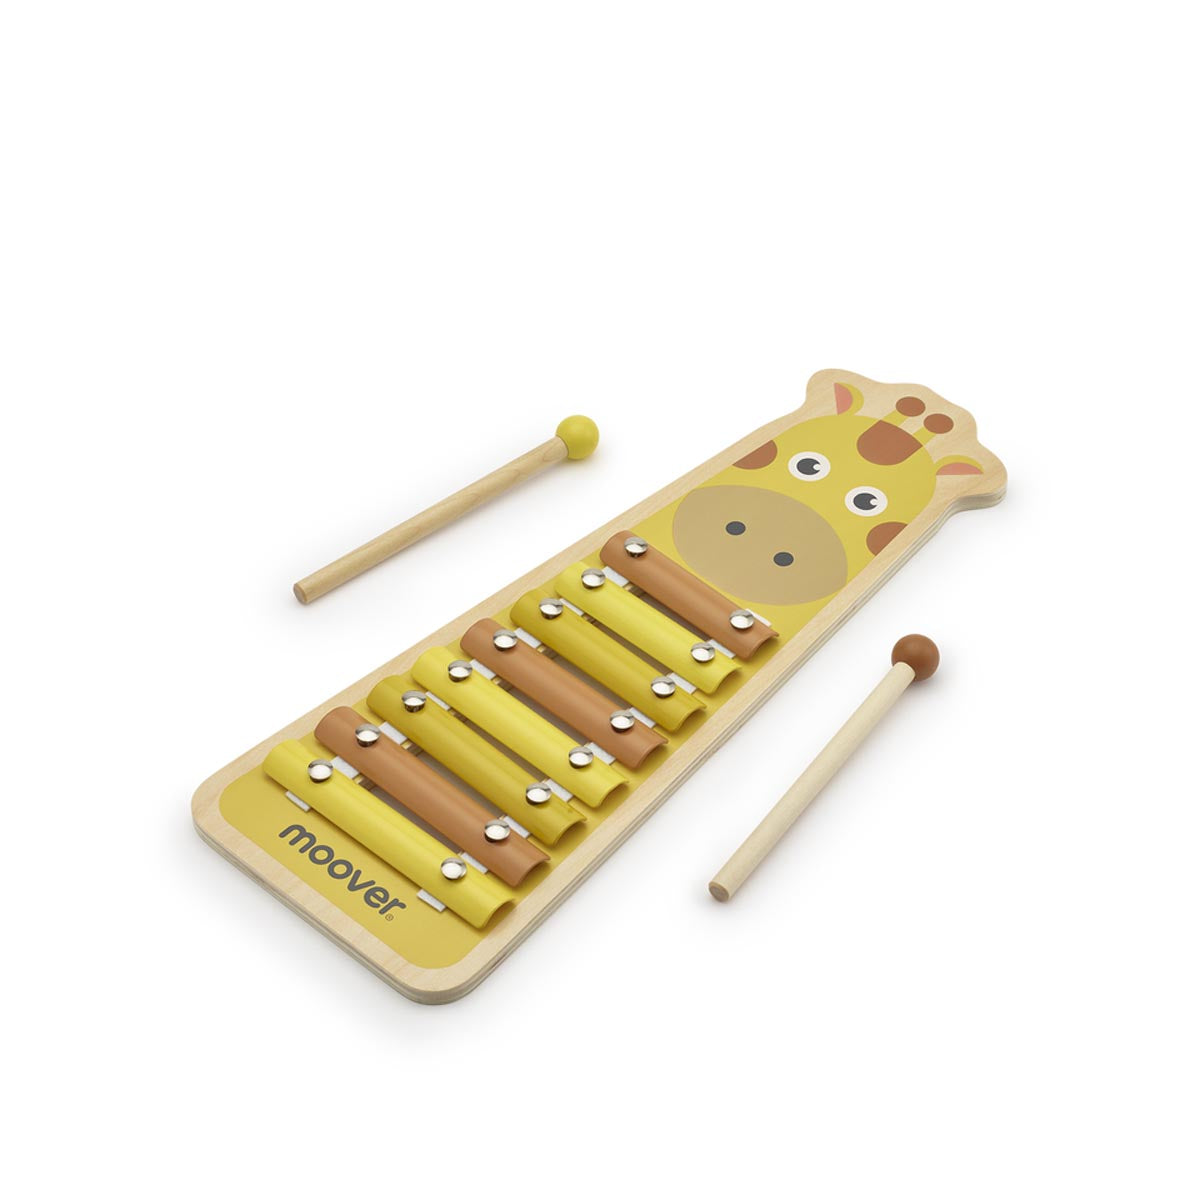 Moover Toys Giraffe Xylophone